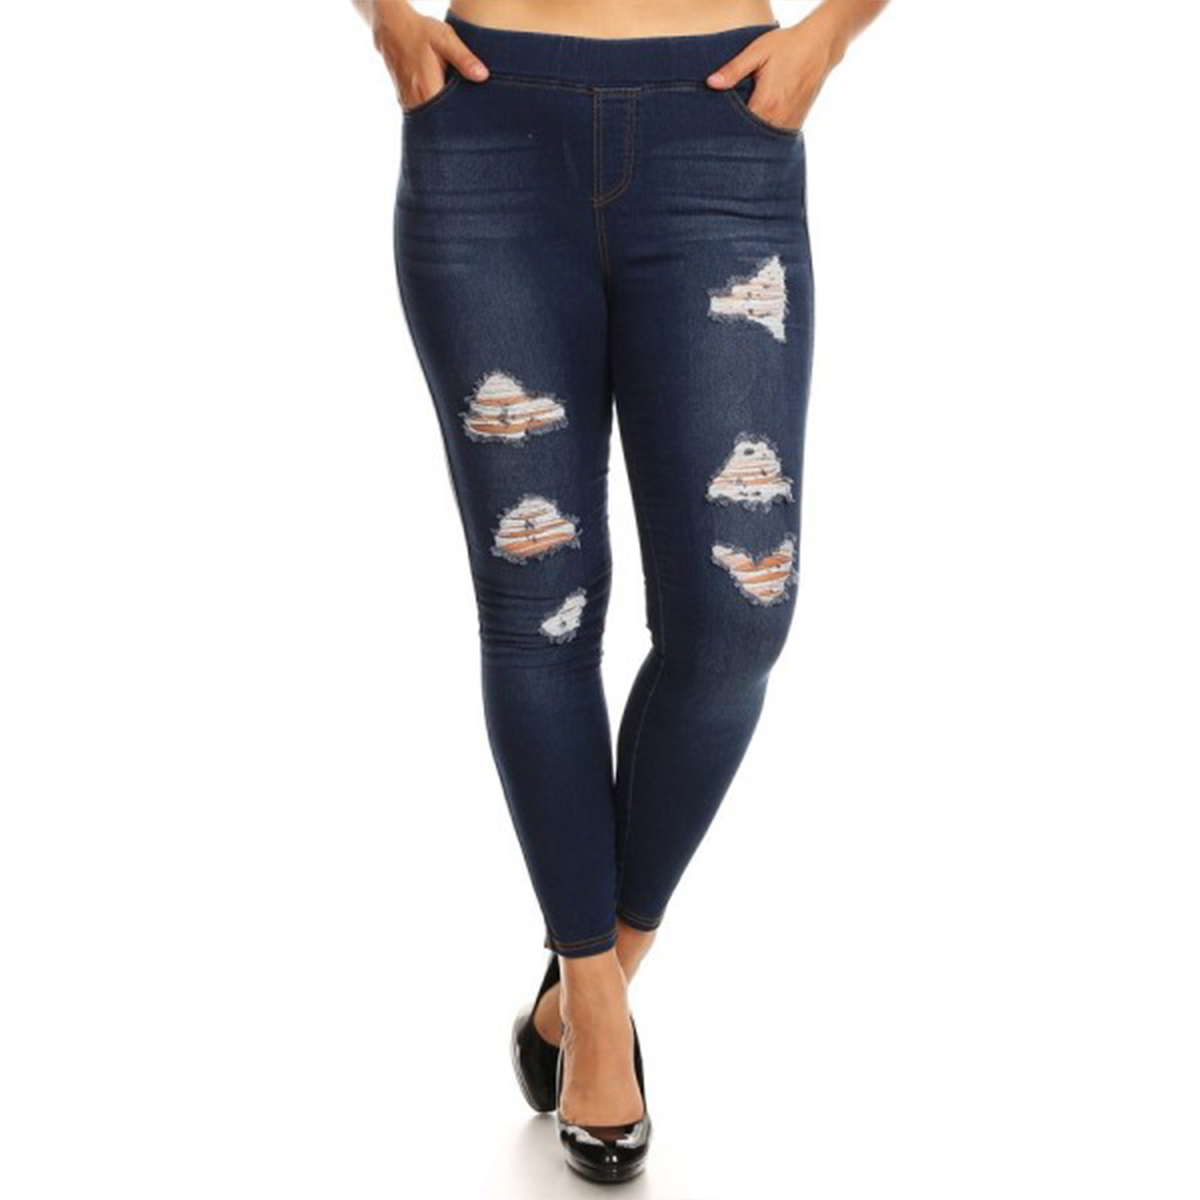 LAVRA Women's True Plus Size Jegging High Waist Jeans Full Length Denim Leggings with Pockets - image 1 of 5